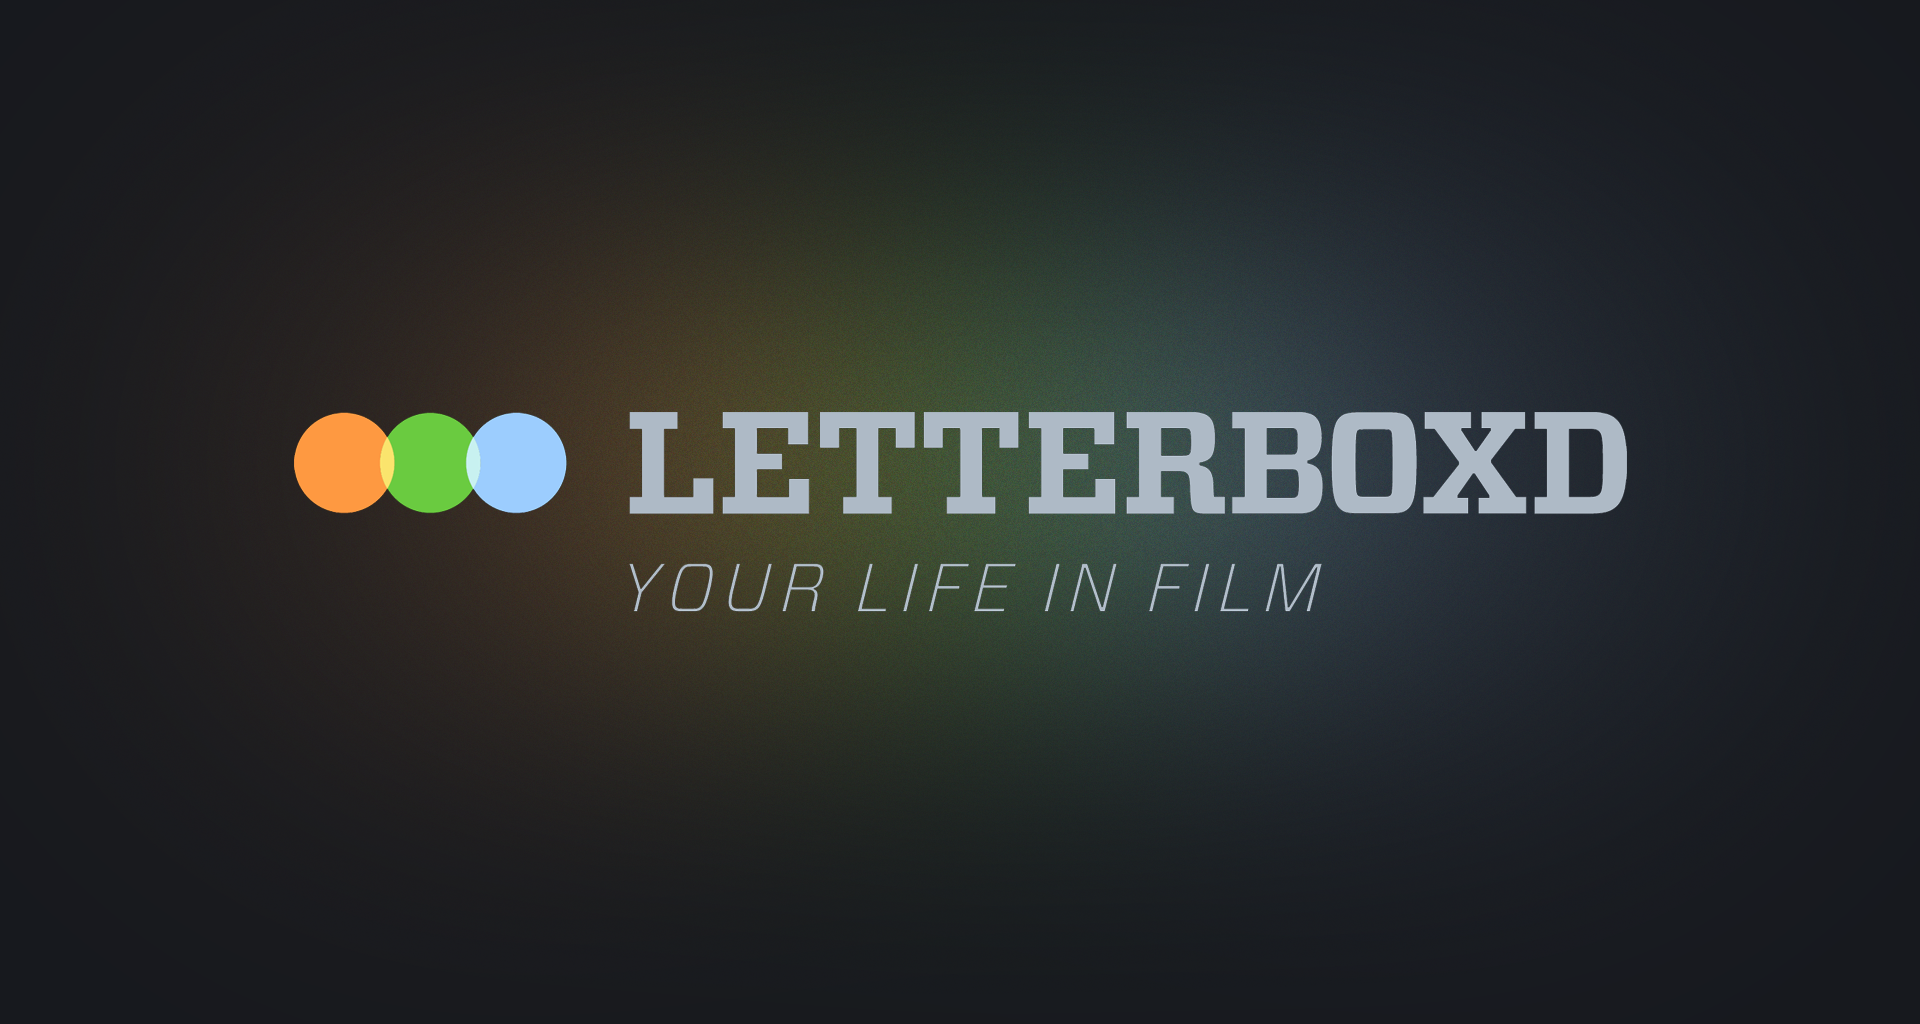 Como usar o letterboxd